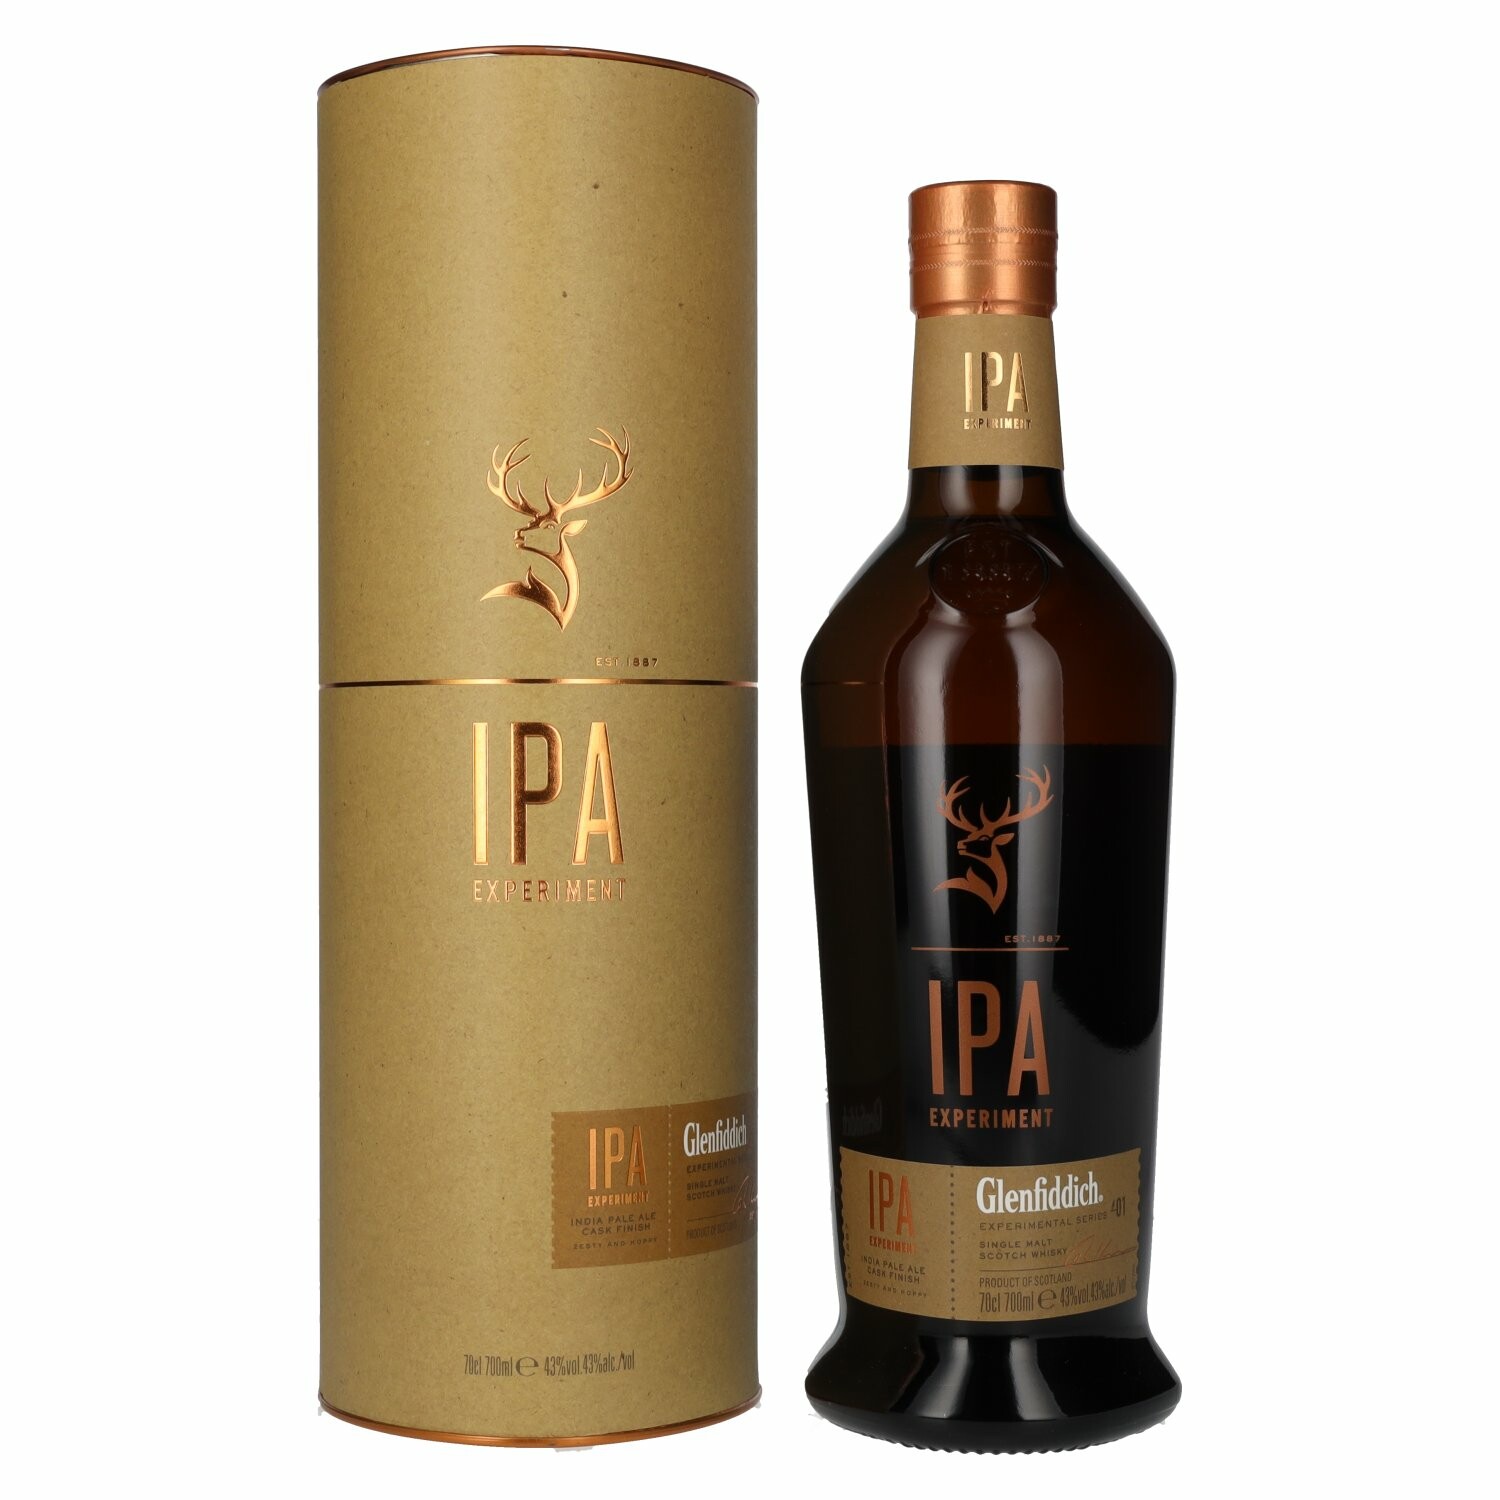 Glenfiddich IPA EXPERIMENT Single Malt Scotch Whisky 43% Vol. 0,7l in Giftbox